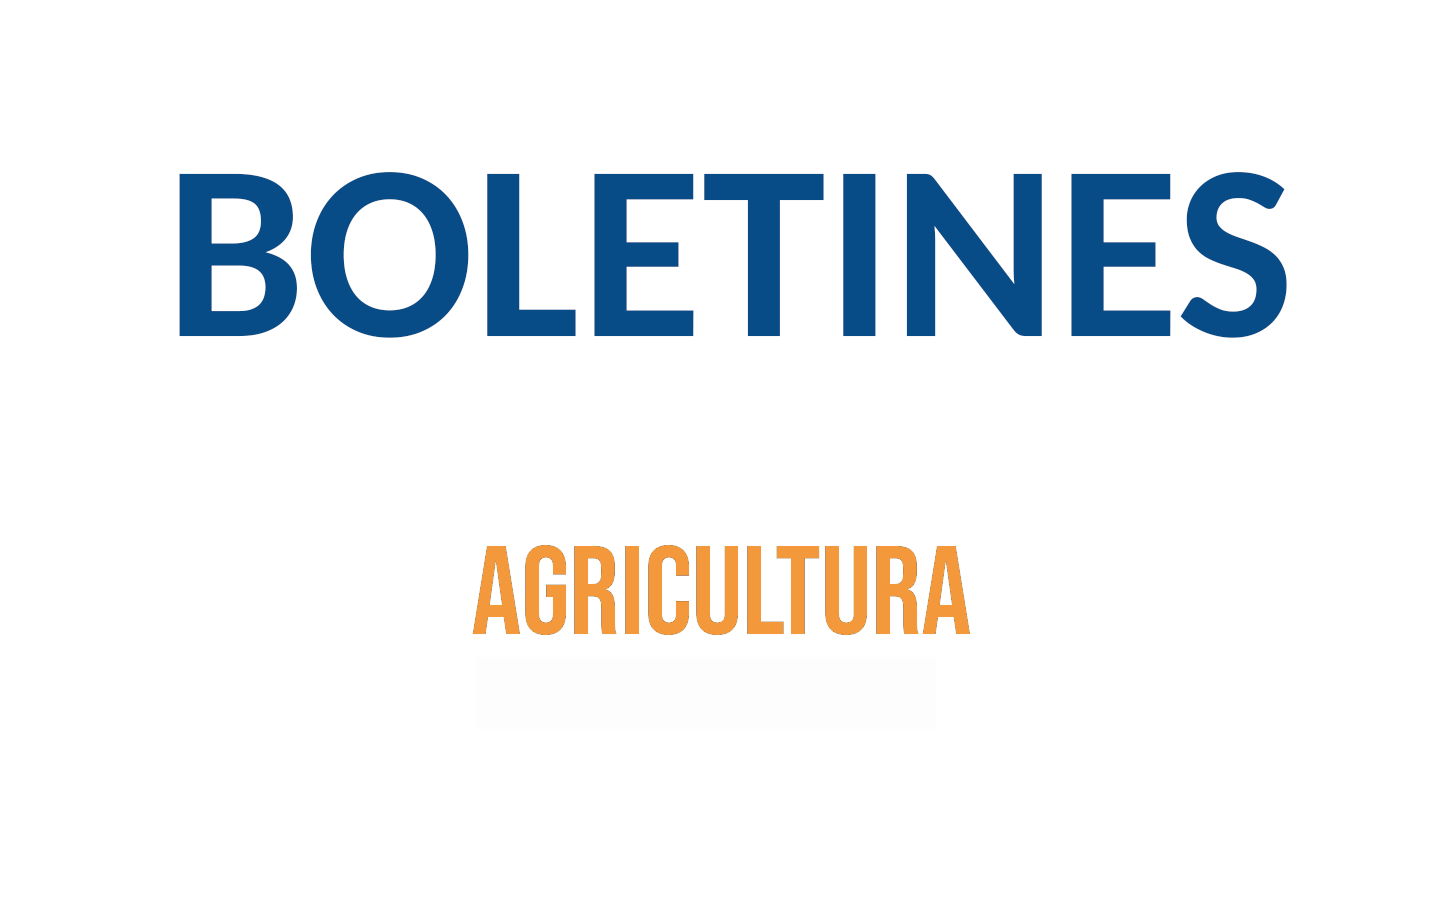 BoletinesAgricultura